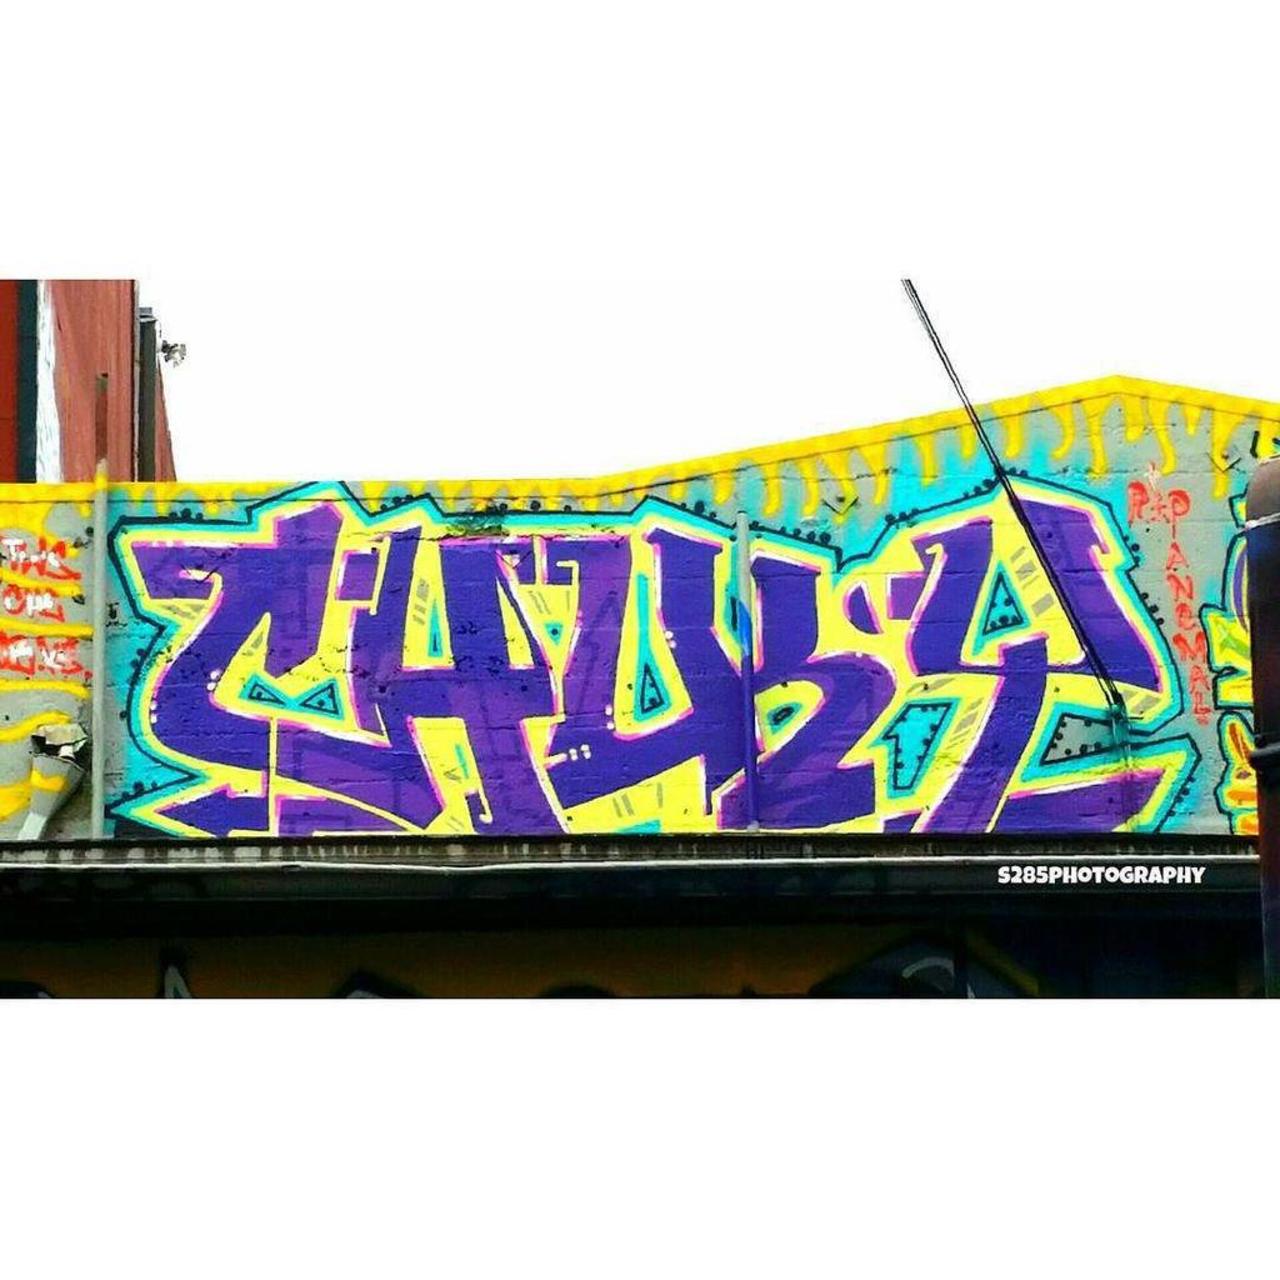 via #fresh2defart "http://ift.tt/1VhnqQD" #graffiti #streetart http://t.co/2Axsd4JSWv